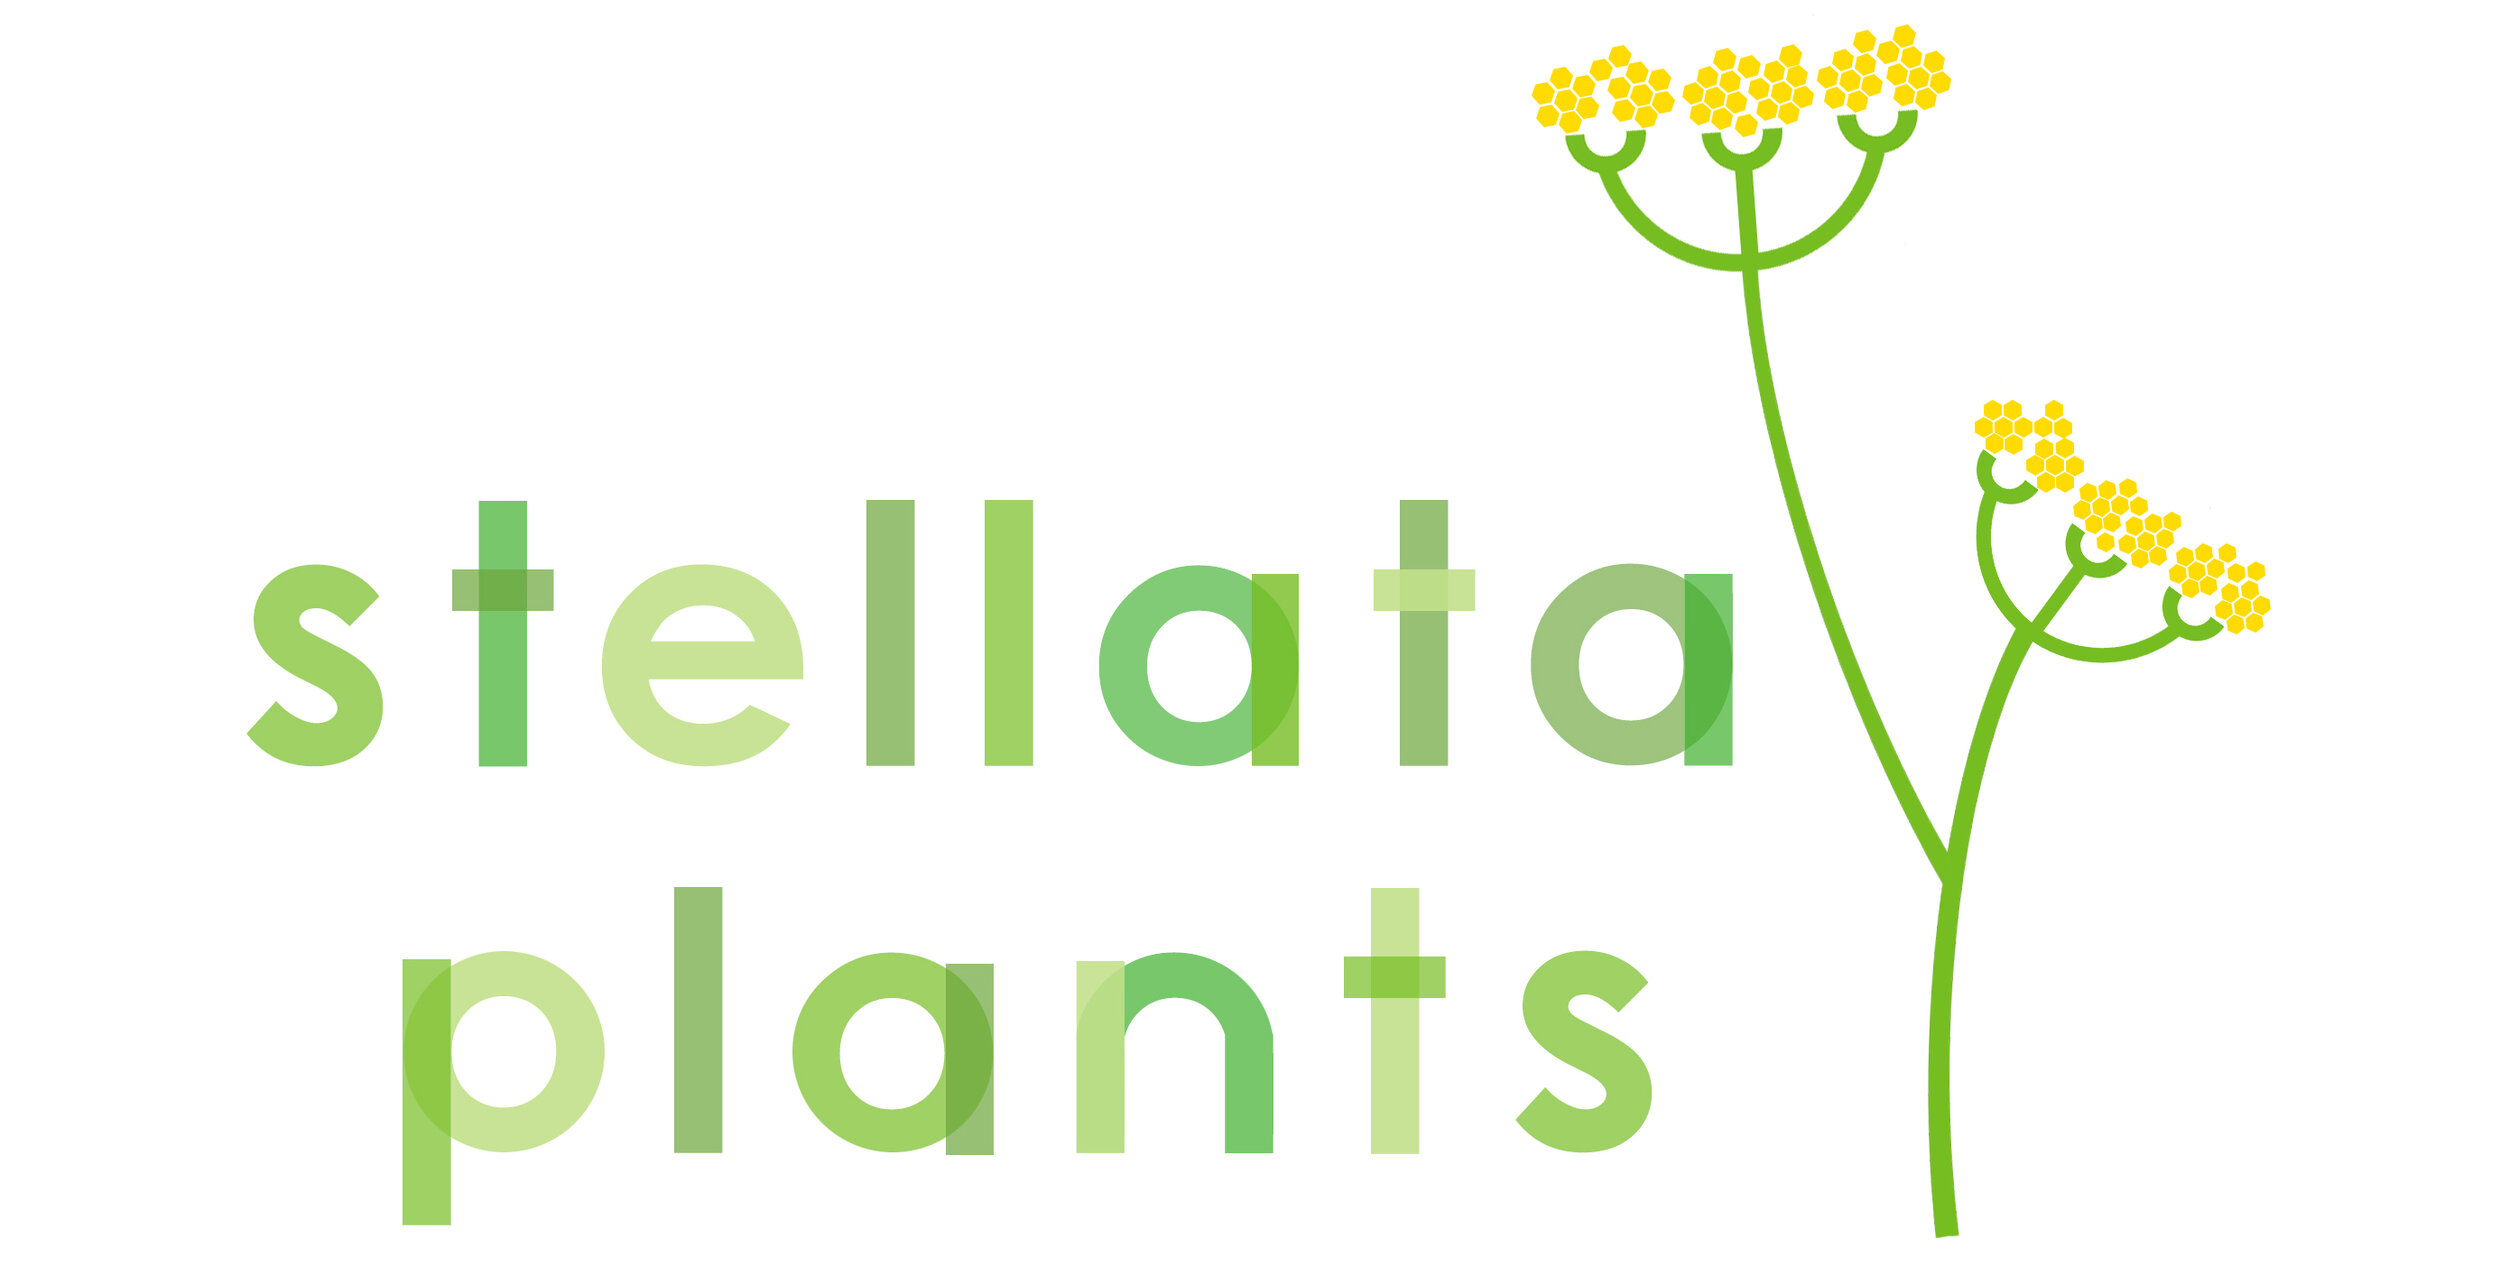  Stellata Plants